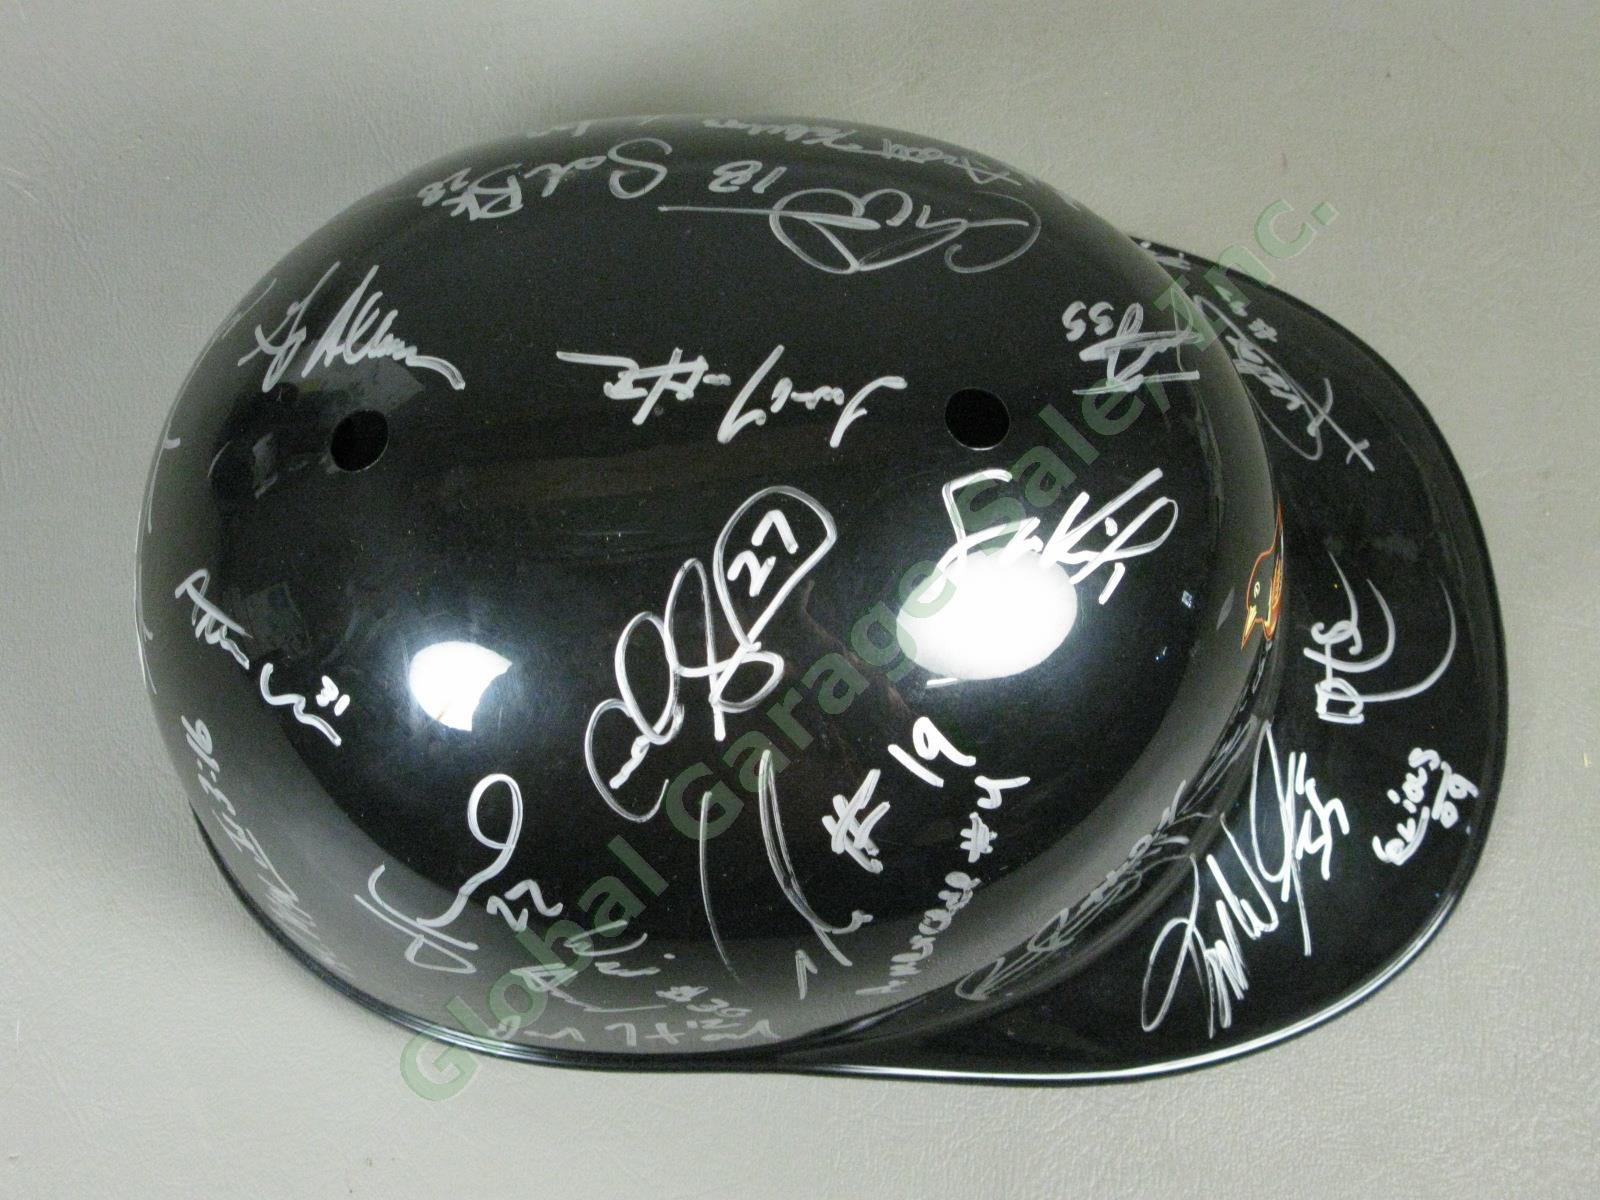 2012 Aberdeen Ironbirds Team Signed Baseball Helmet NYPL Baltimore Orioles NR 4